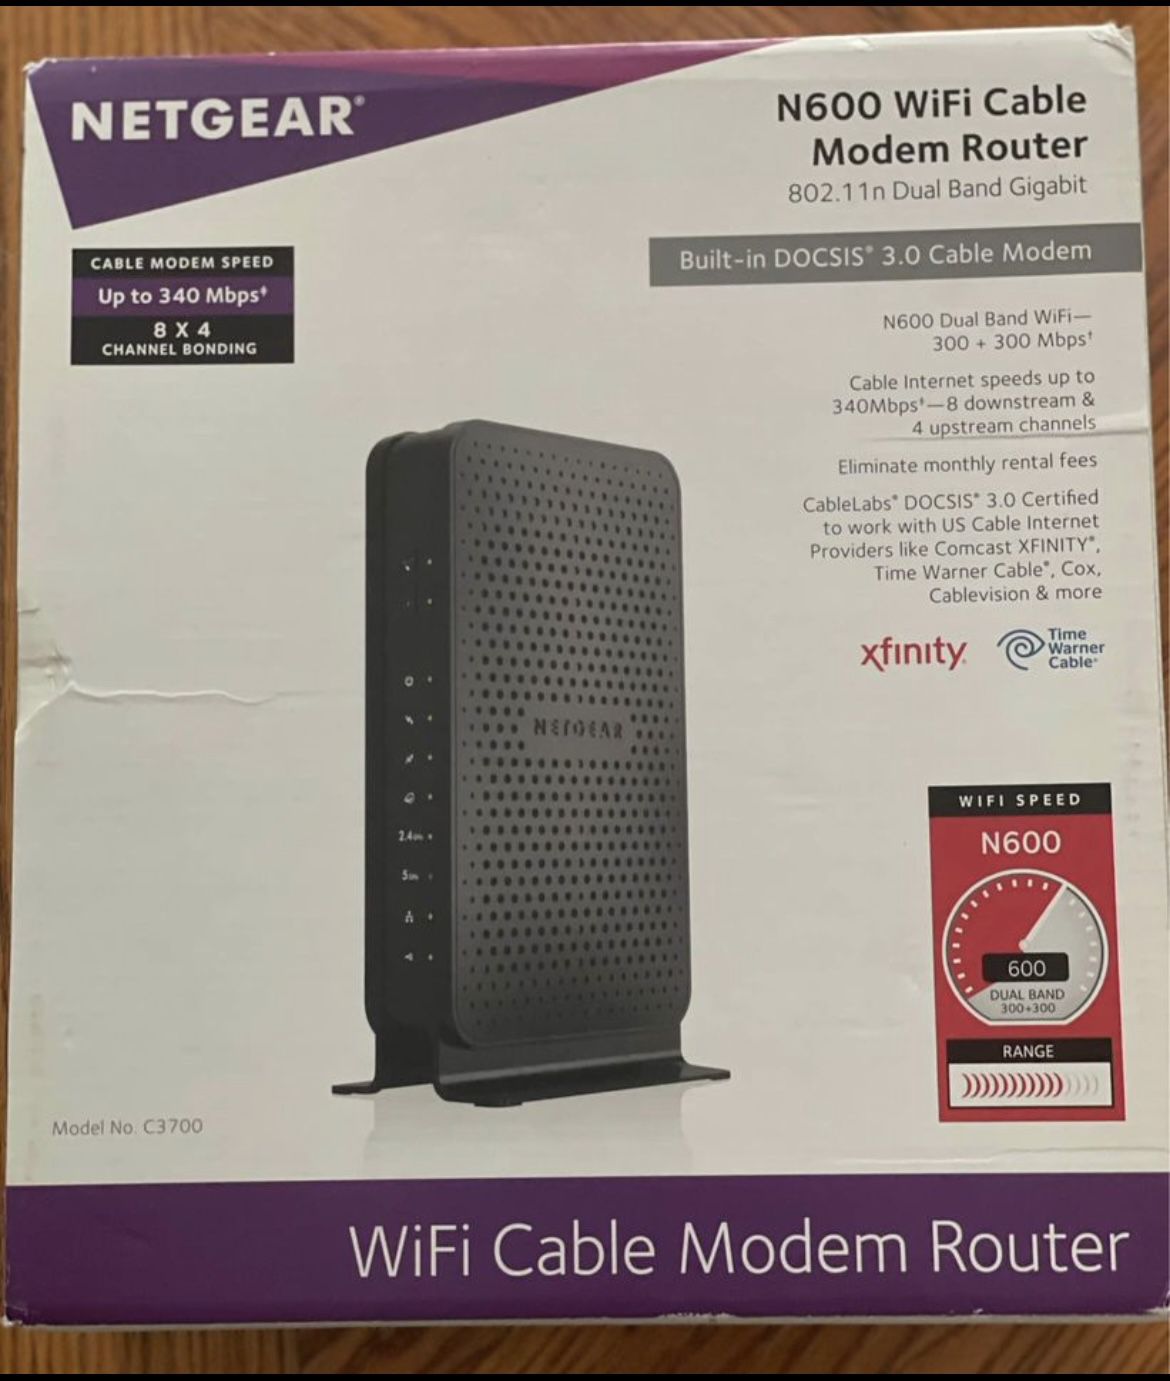 NETGEAR N600 WiFi Cable Modem Router 